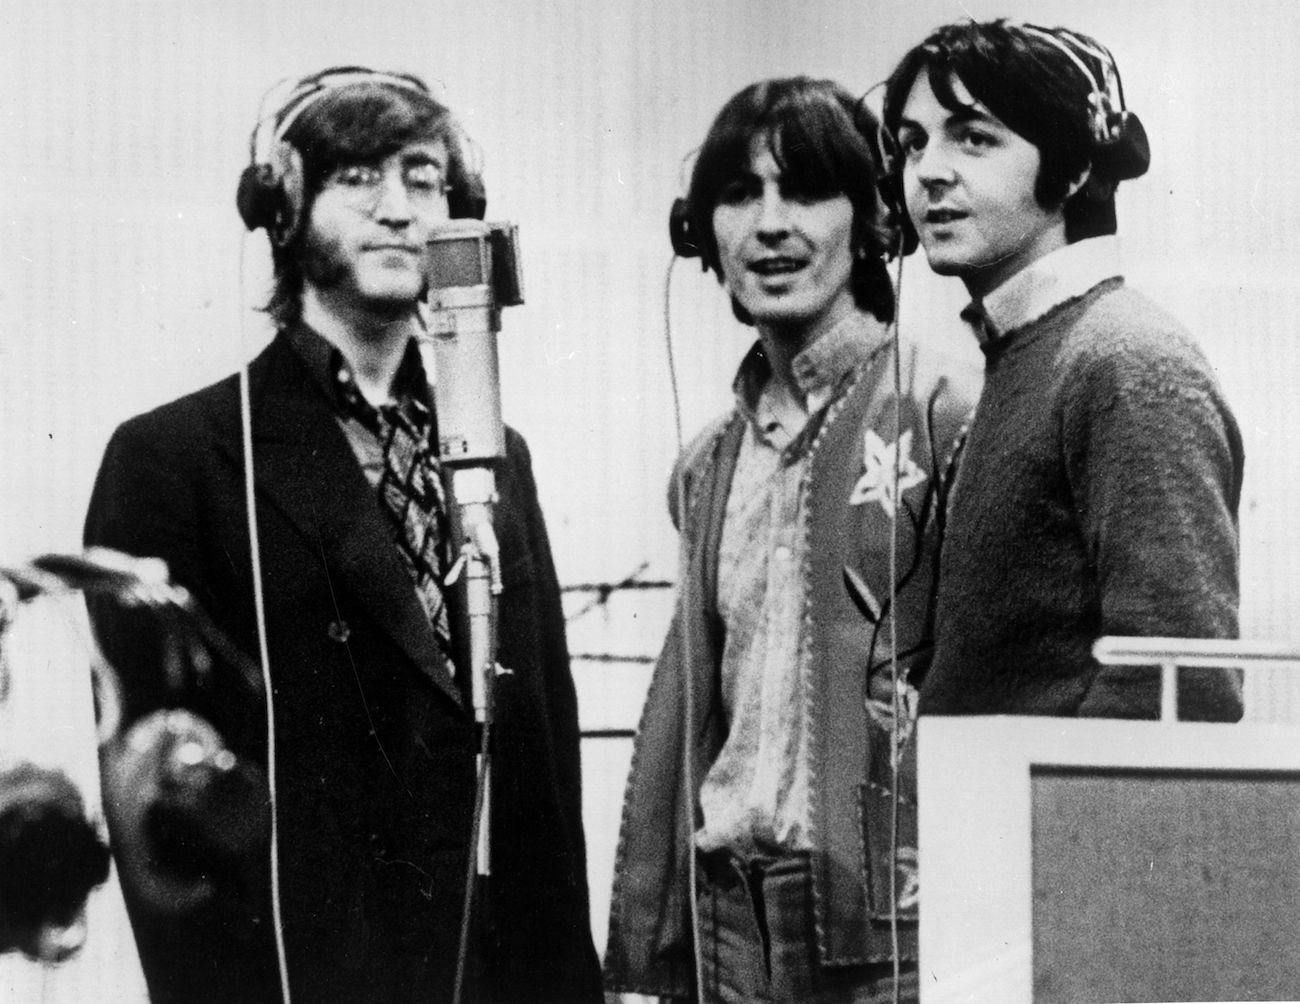 John Lennon, George Harrison and Paul McCartney in the recording studio in 1968.